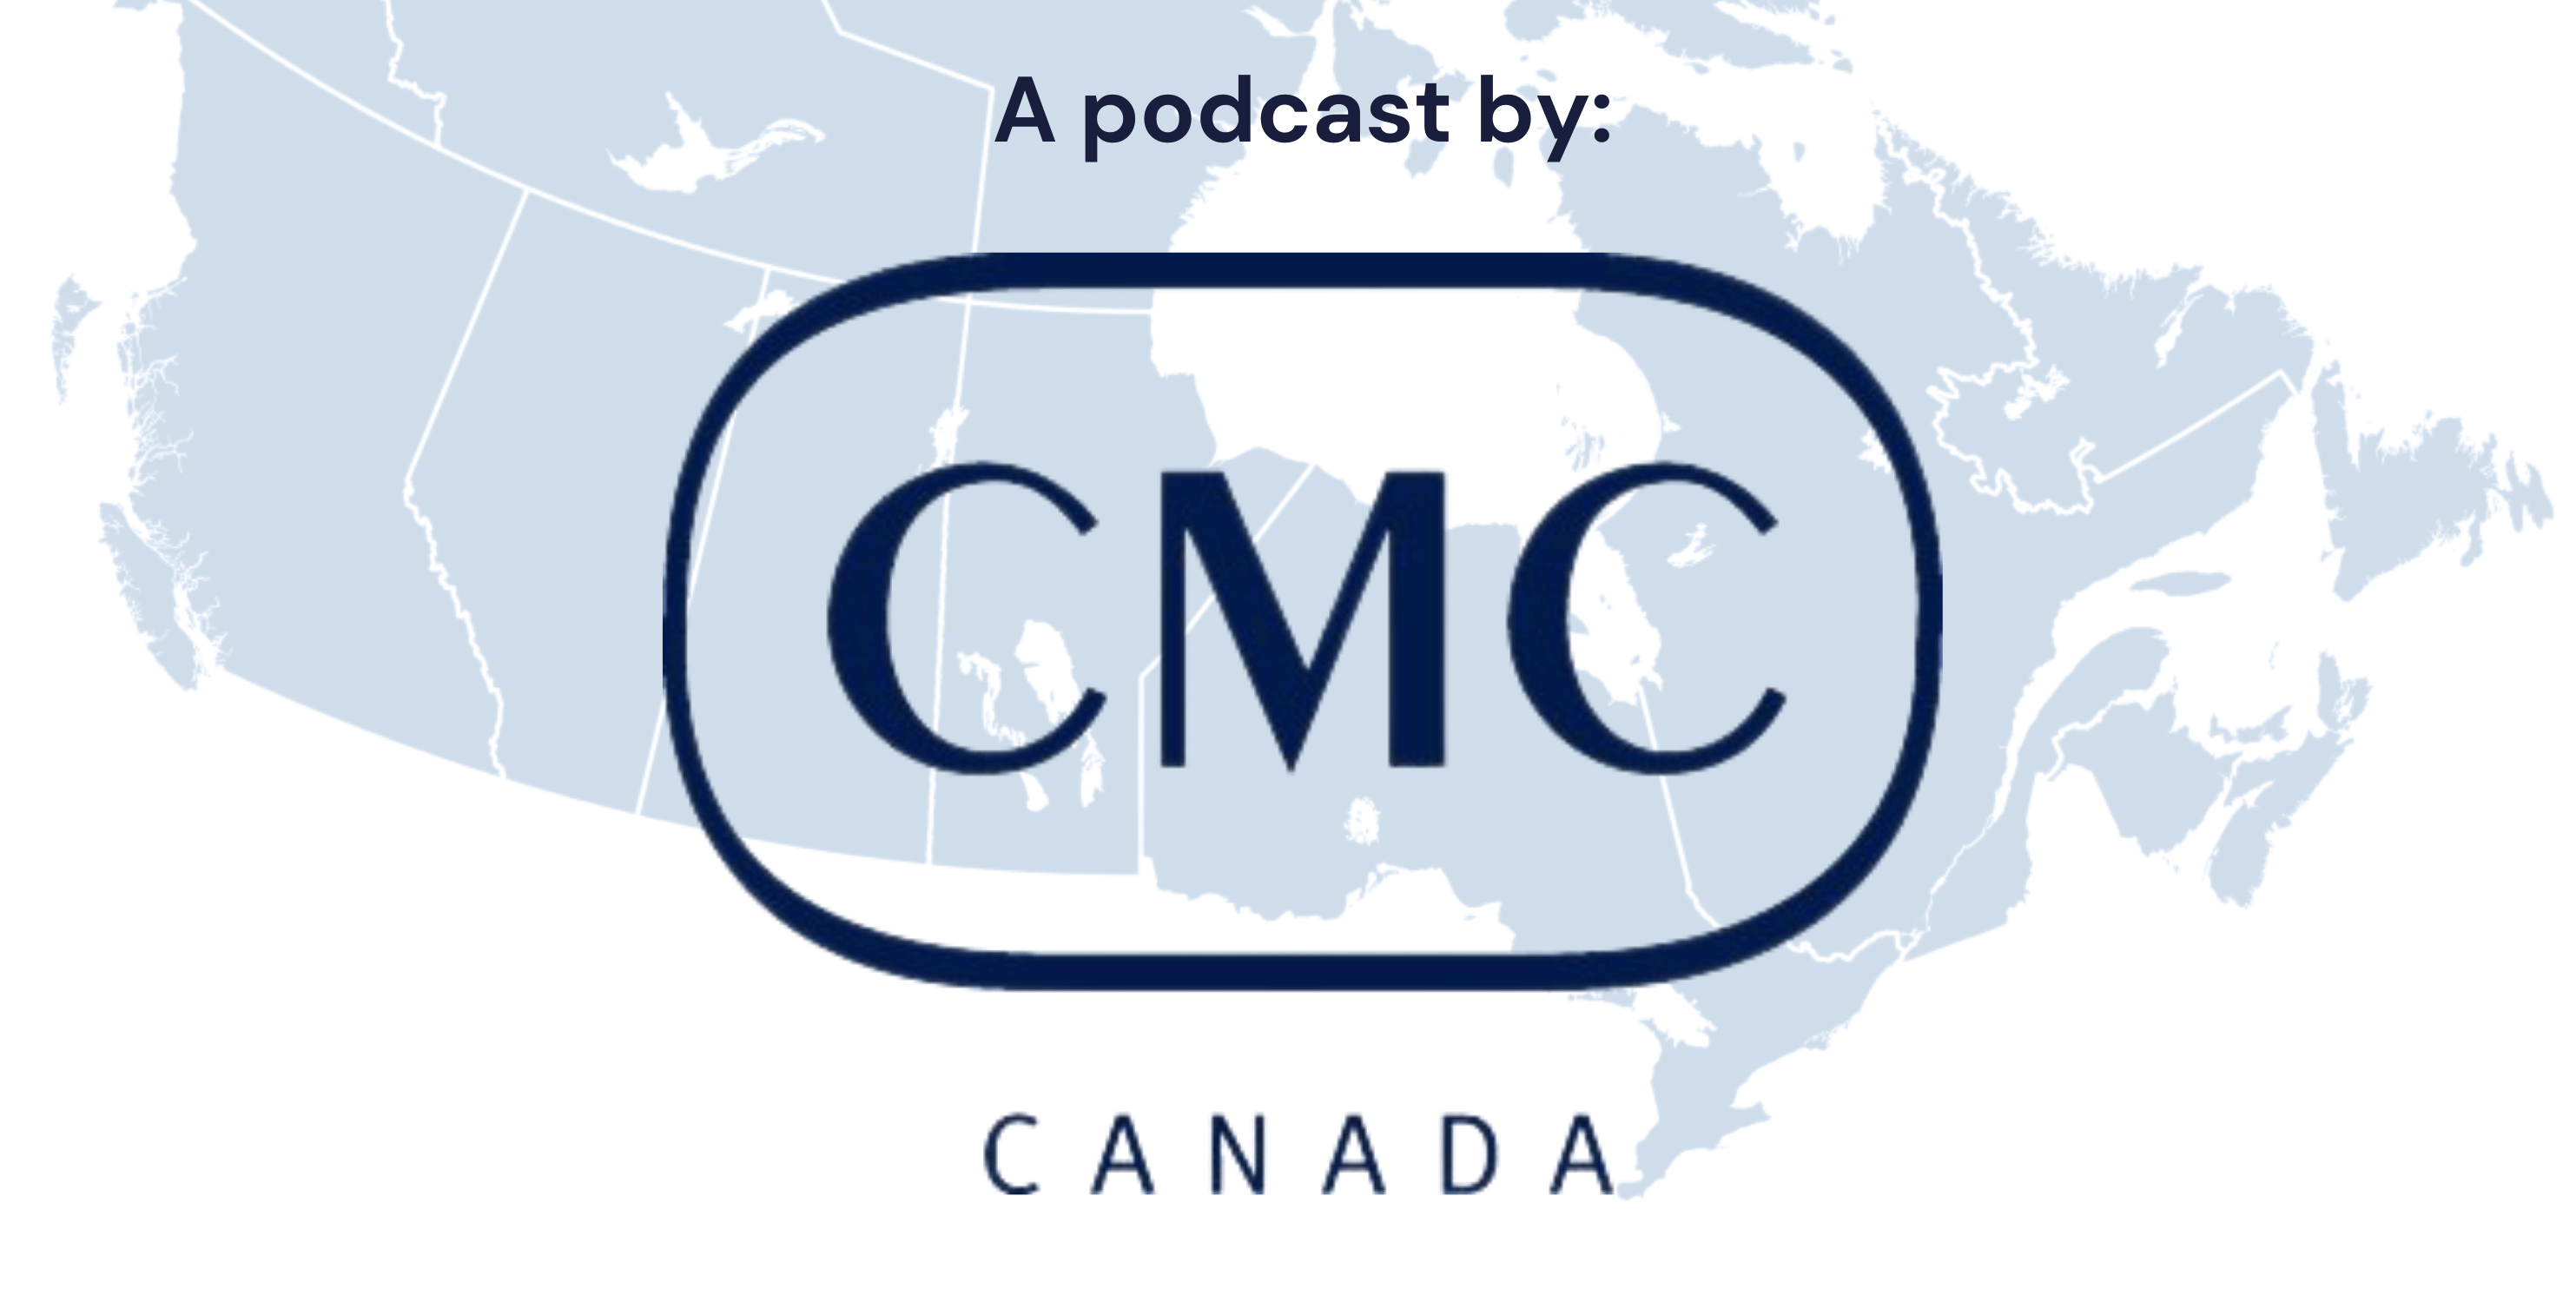 CMC-Canada Podcast: Episode 9 Released